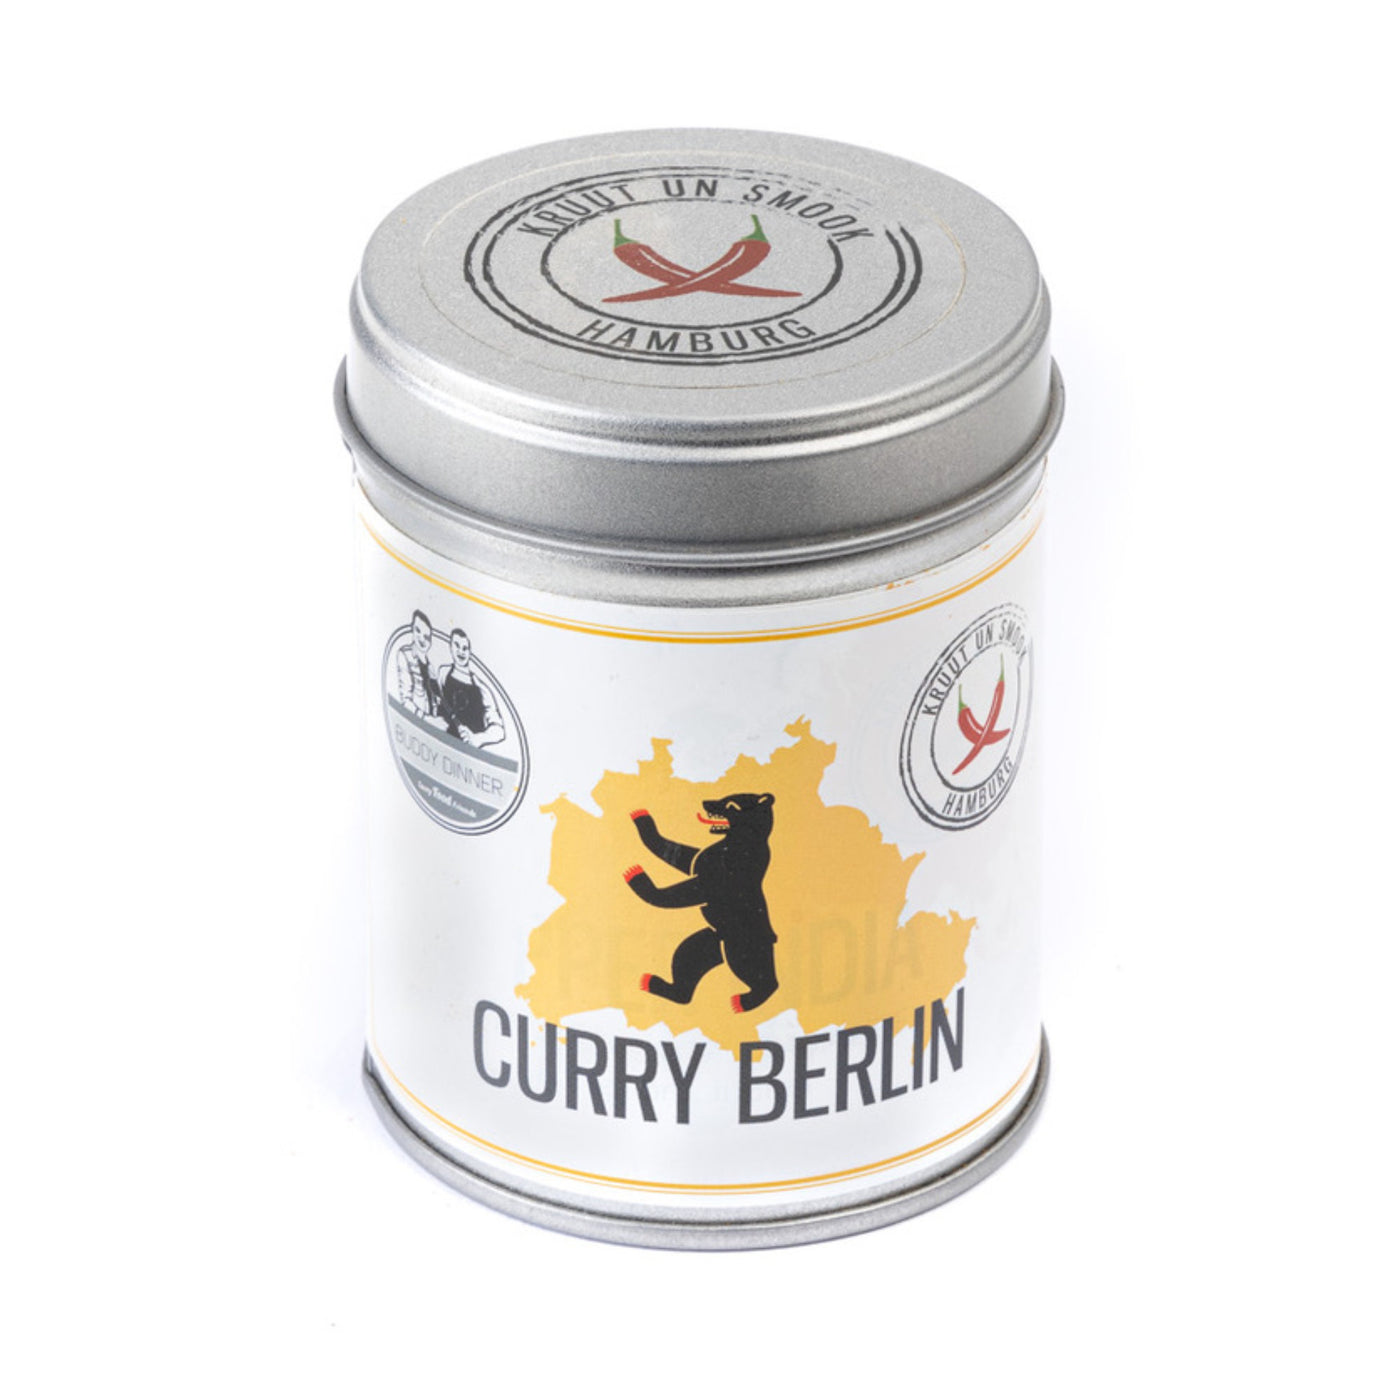 Curry Berlin